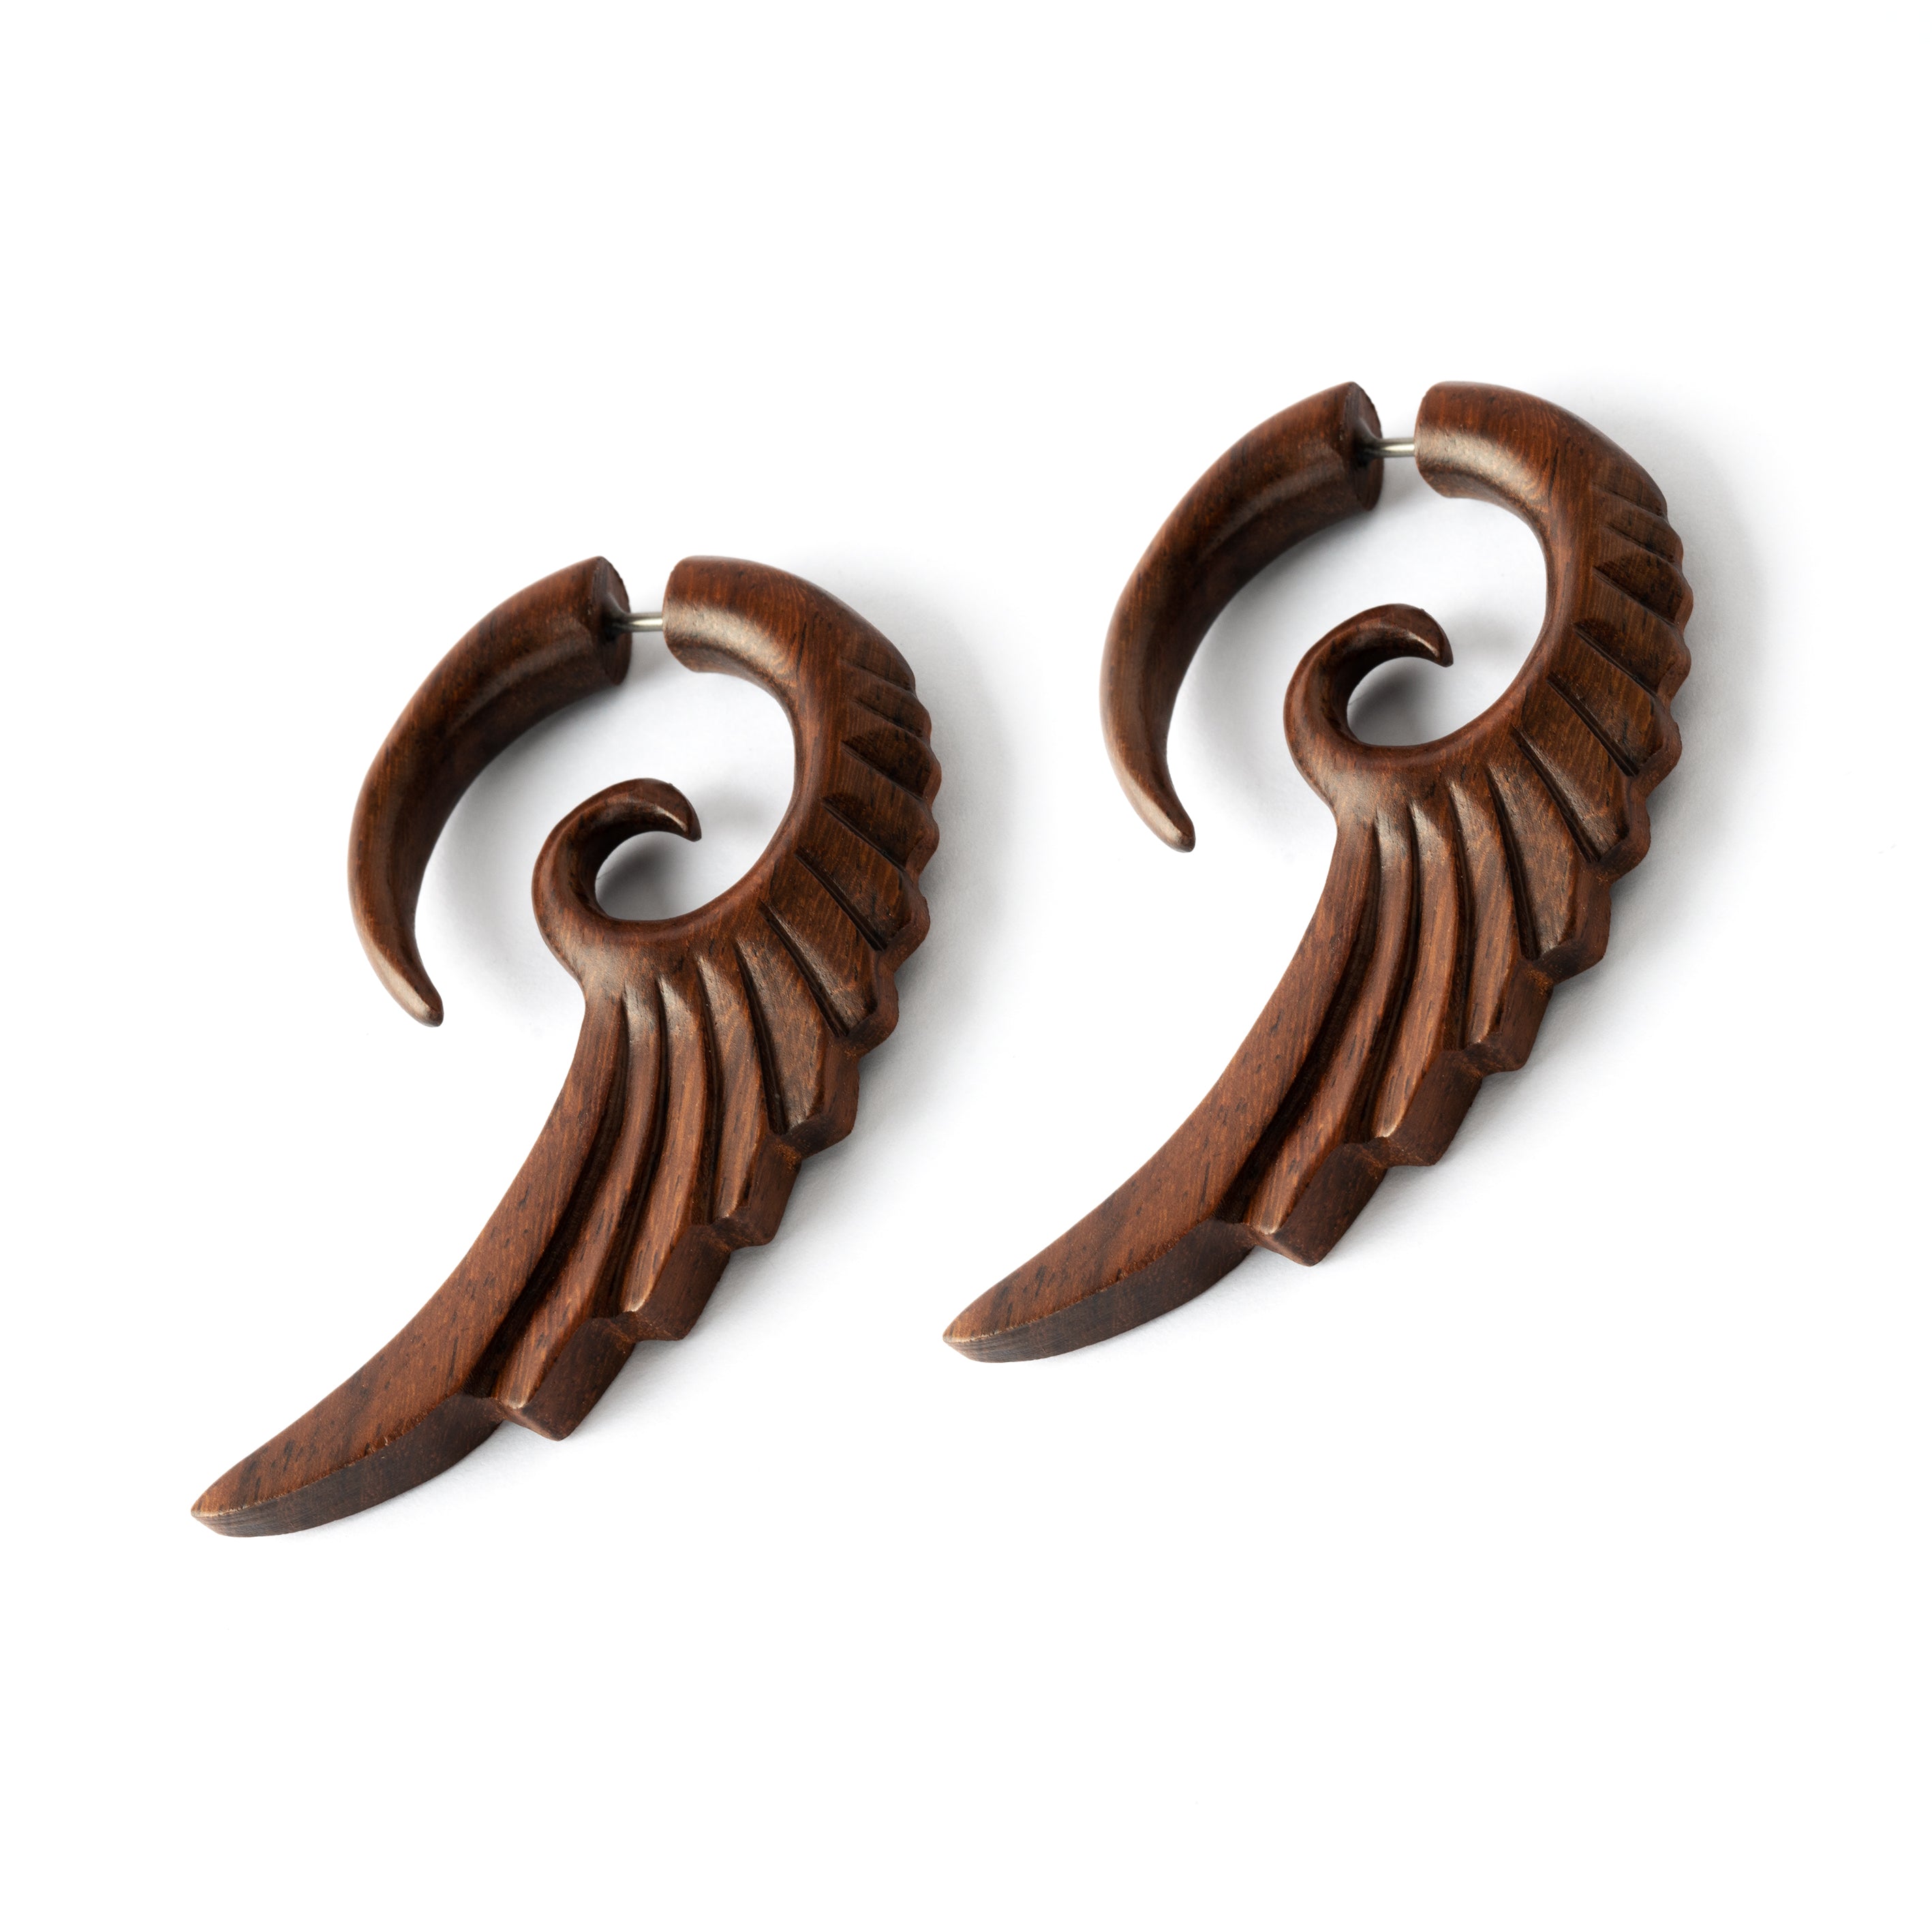 pair of cockatoo shaped out of wood fake gauge earrings